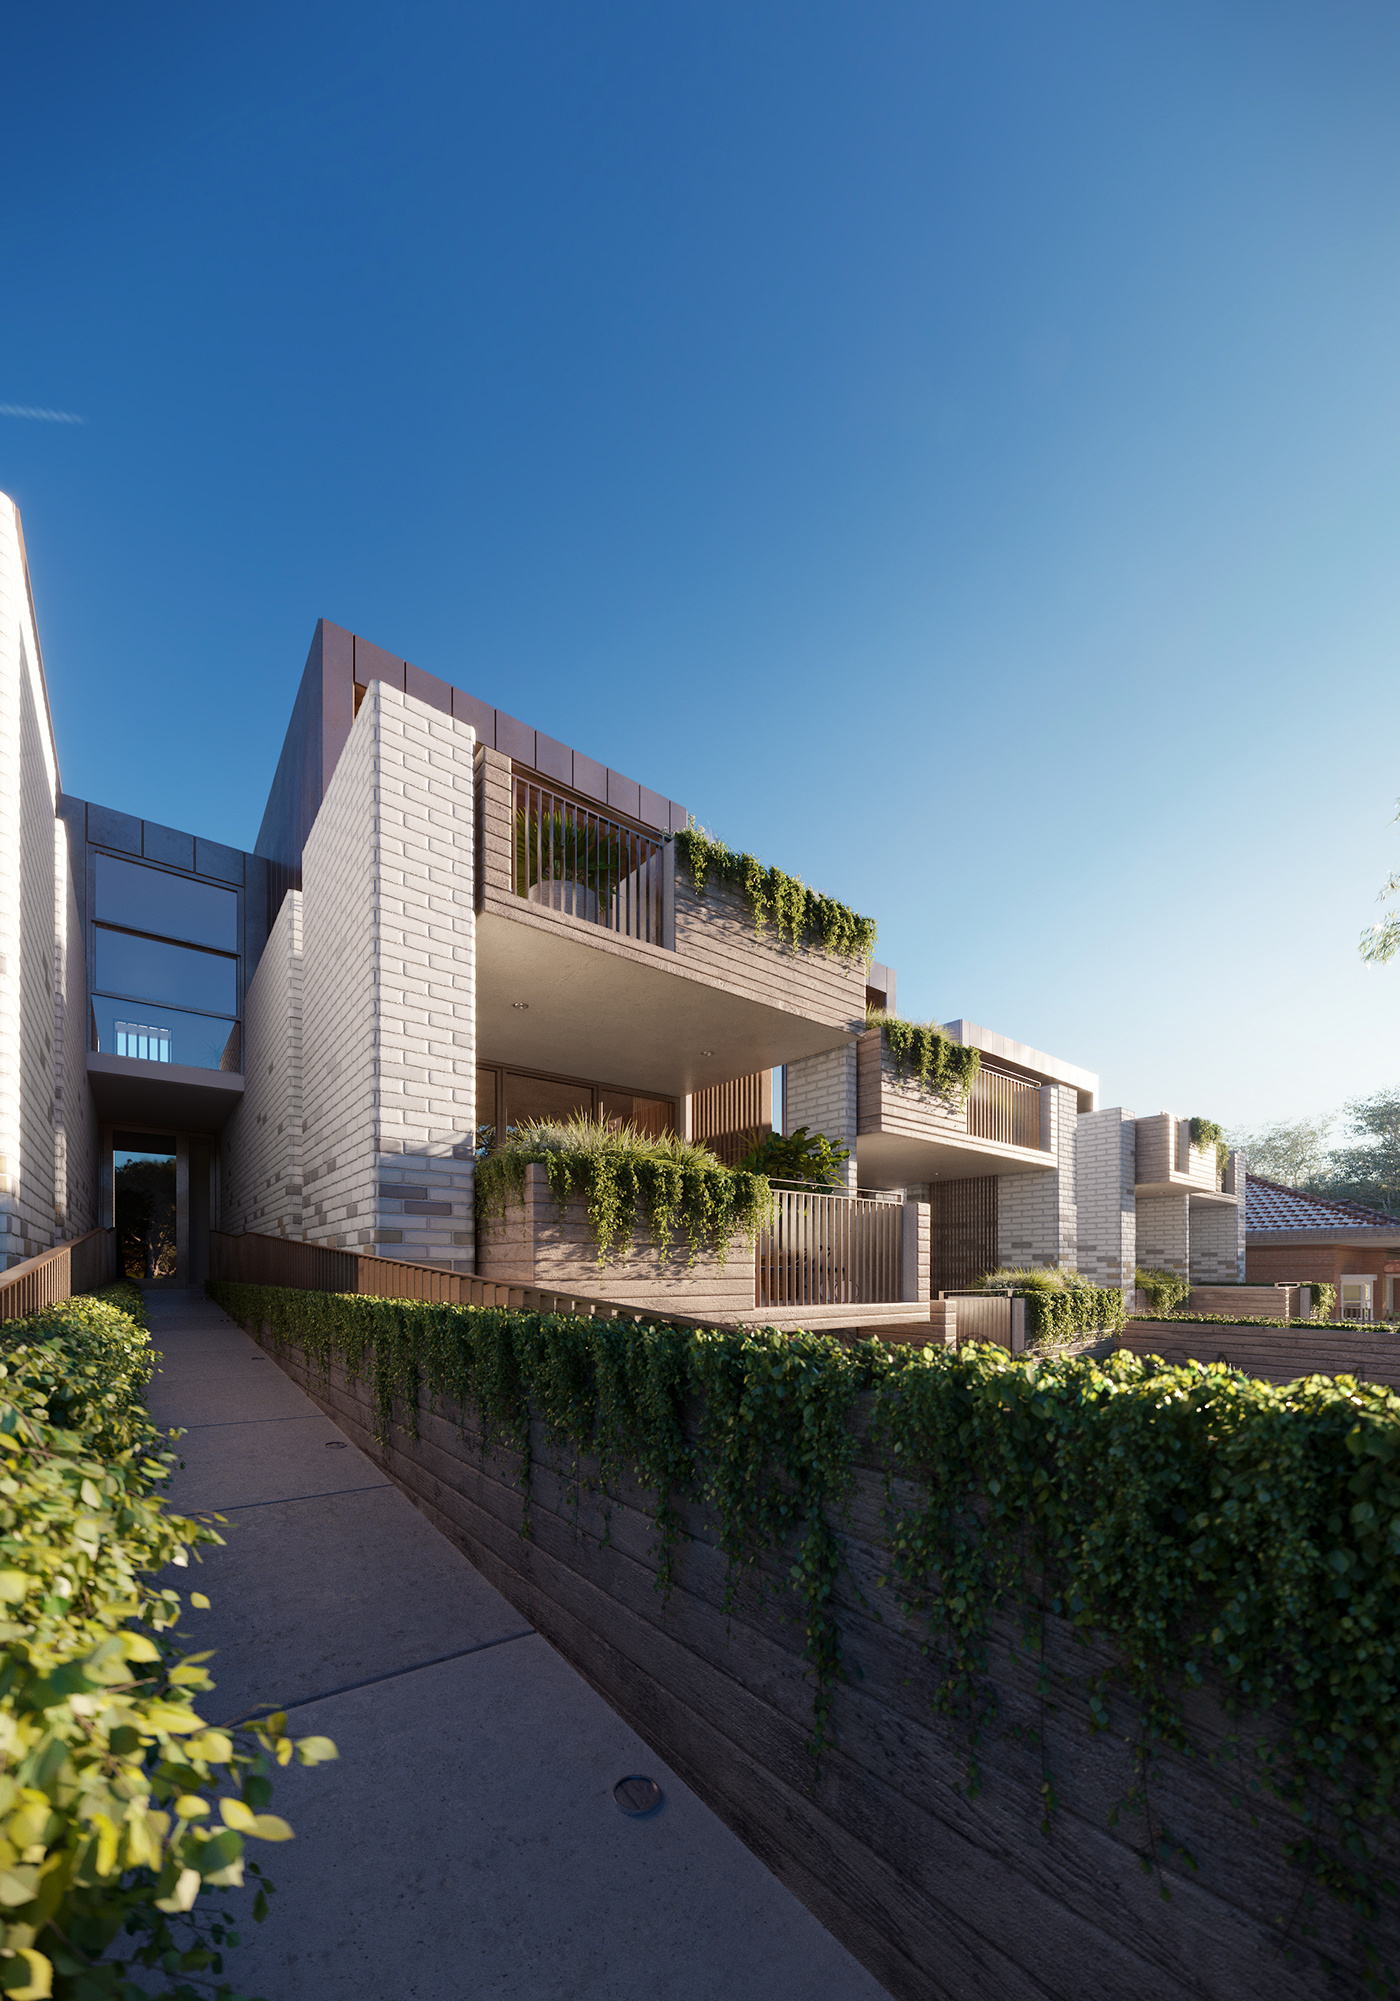 Australia residential corona real estate property marketing   Sunny blue sky contrasts